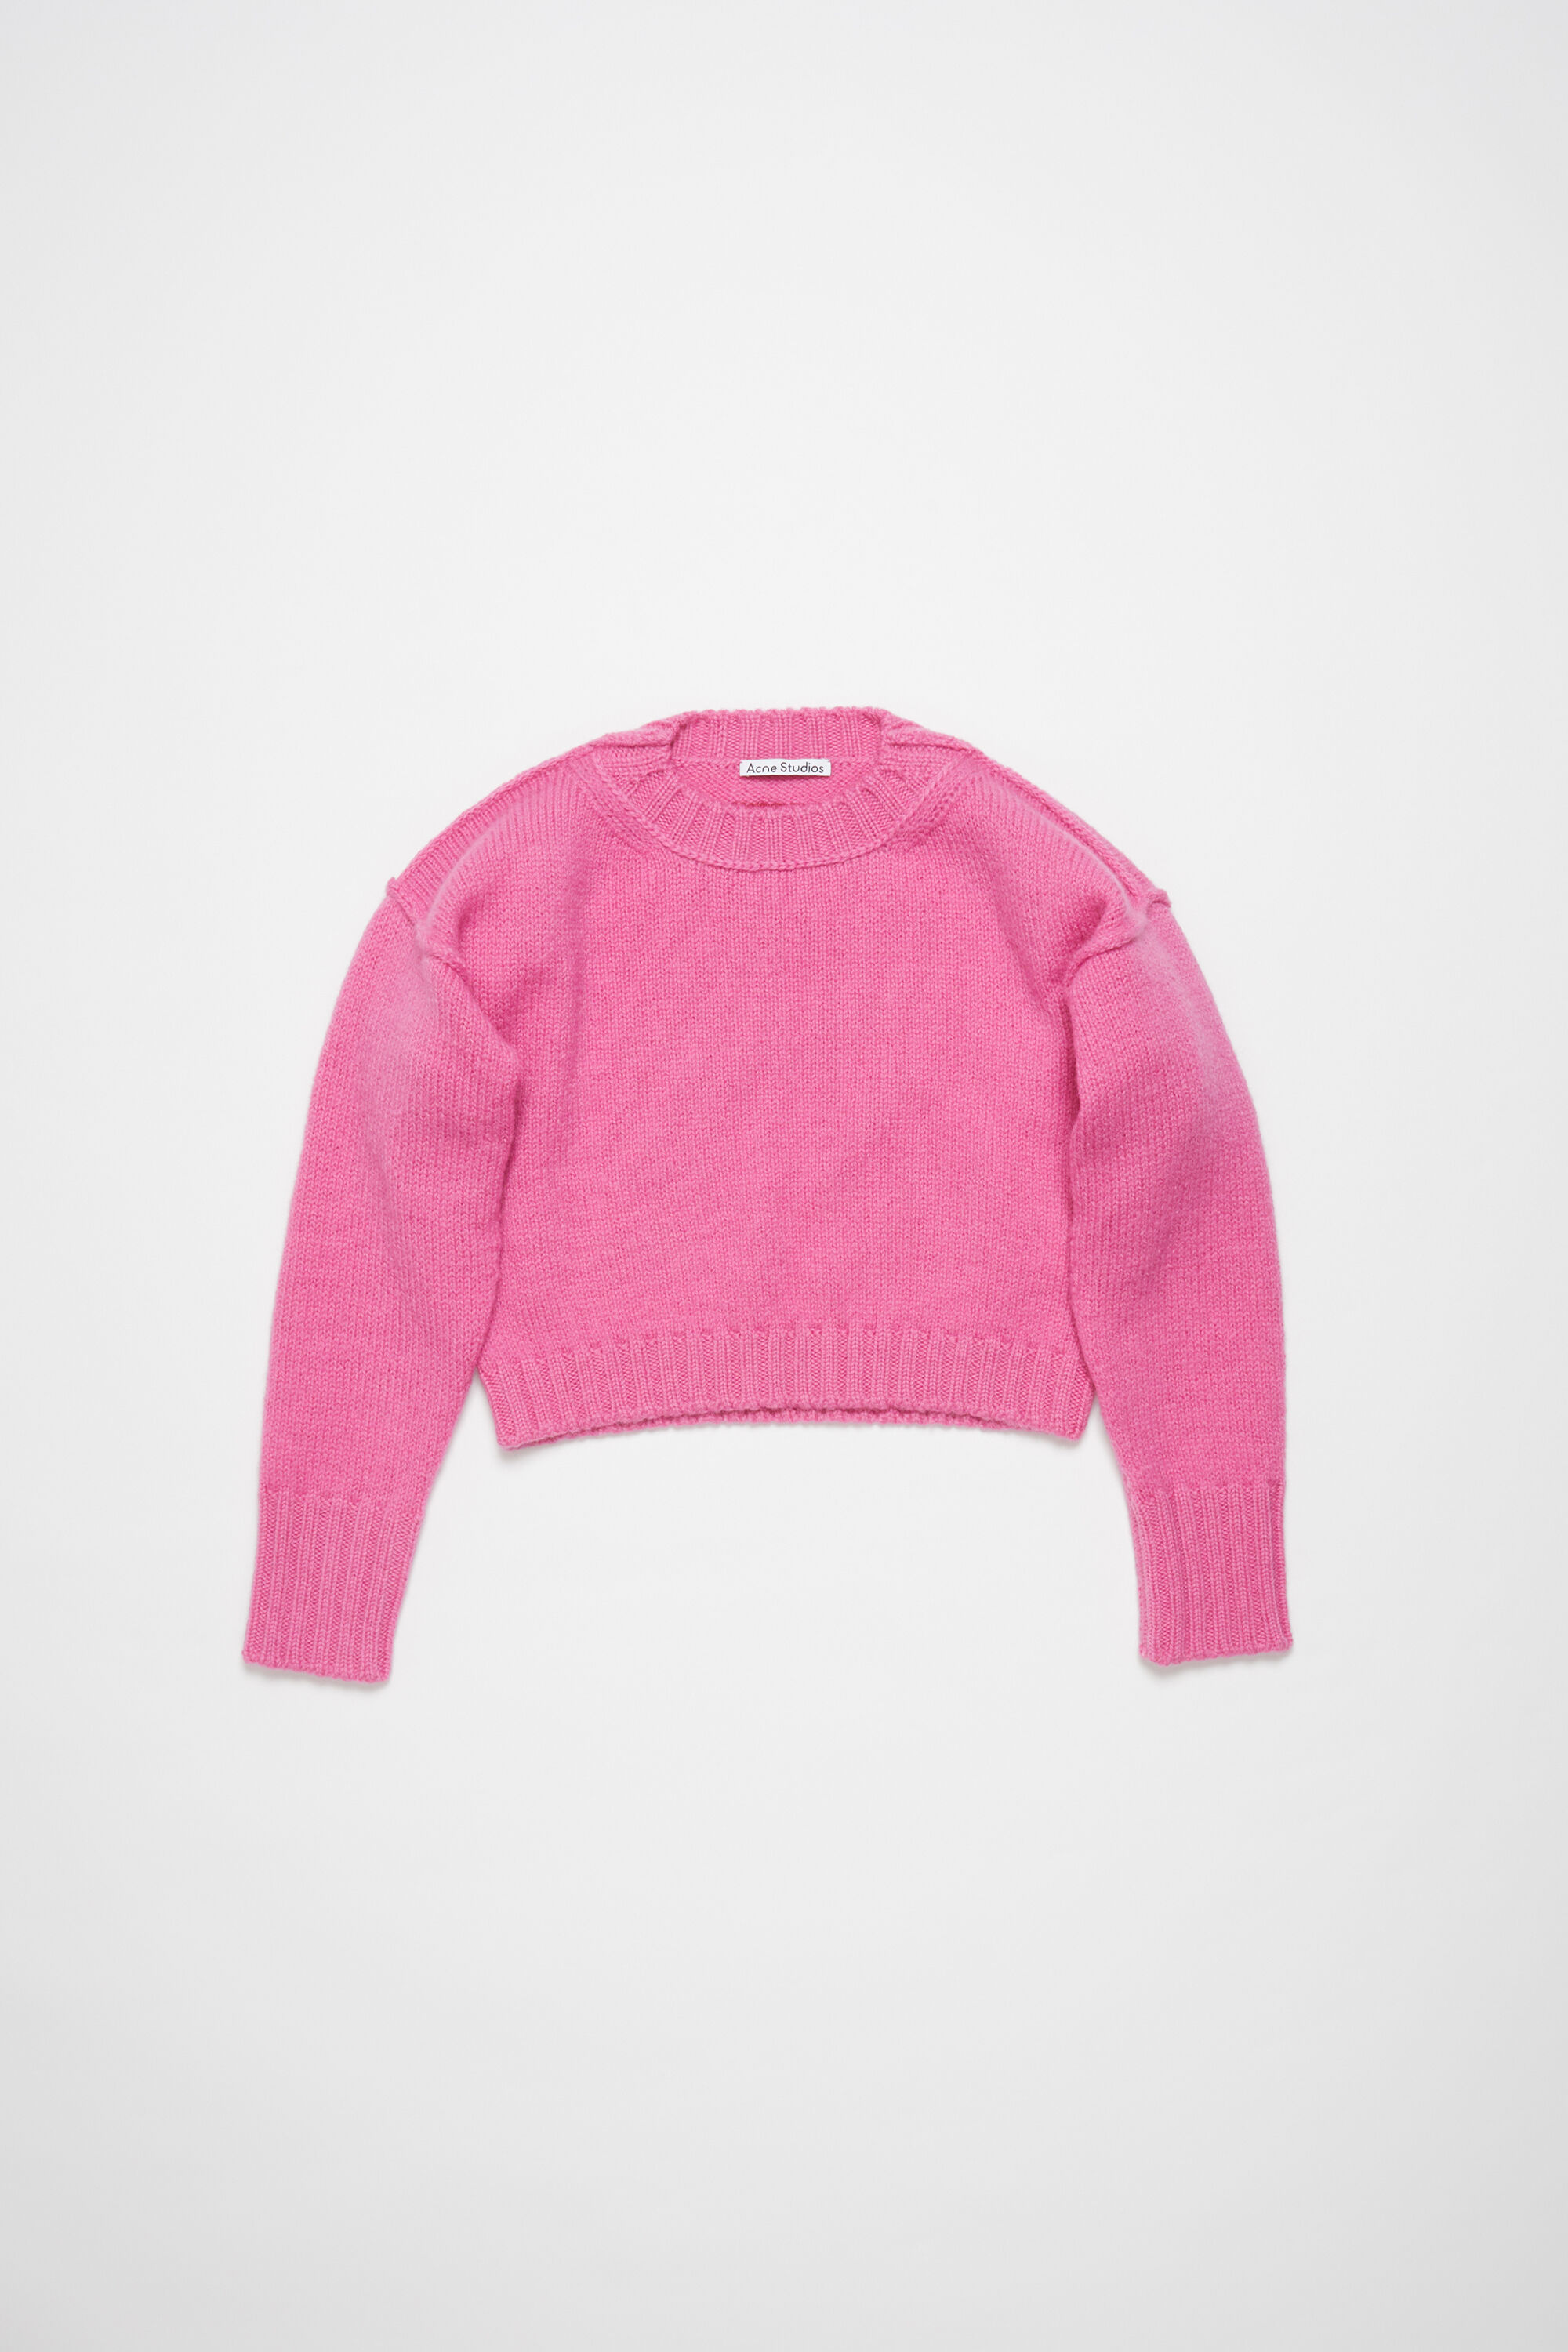 Acne Studios - Crew neck wool jumper - Pink